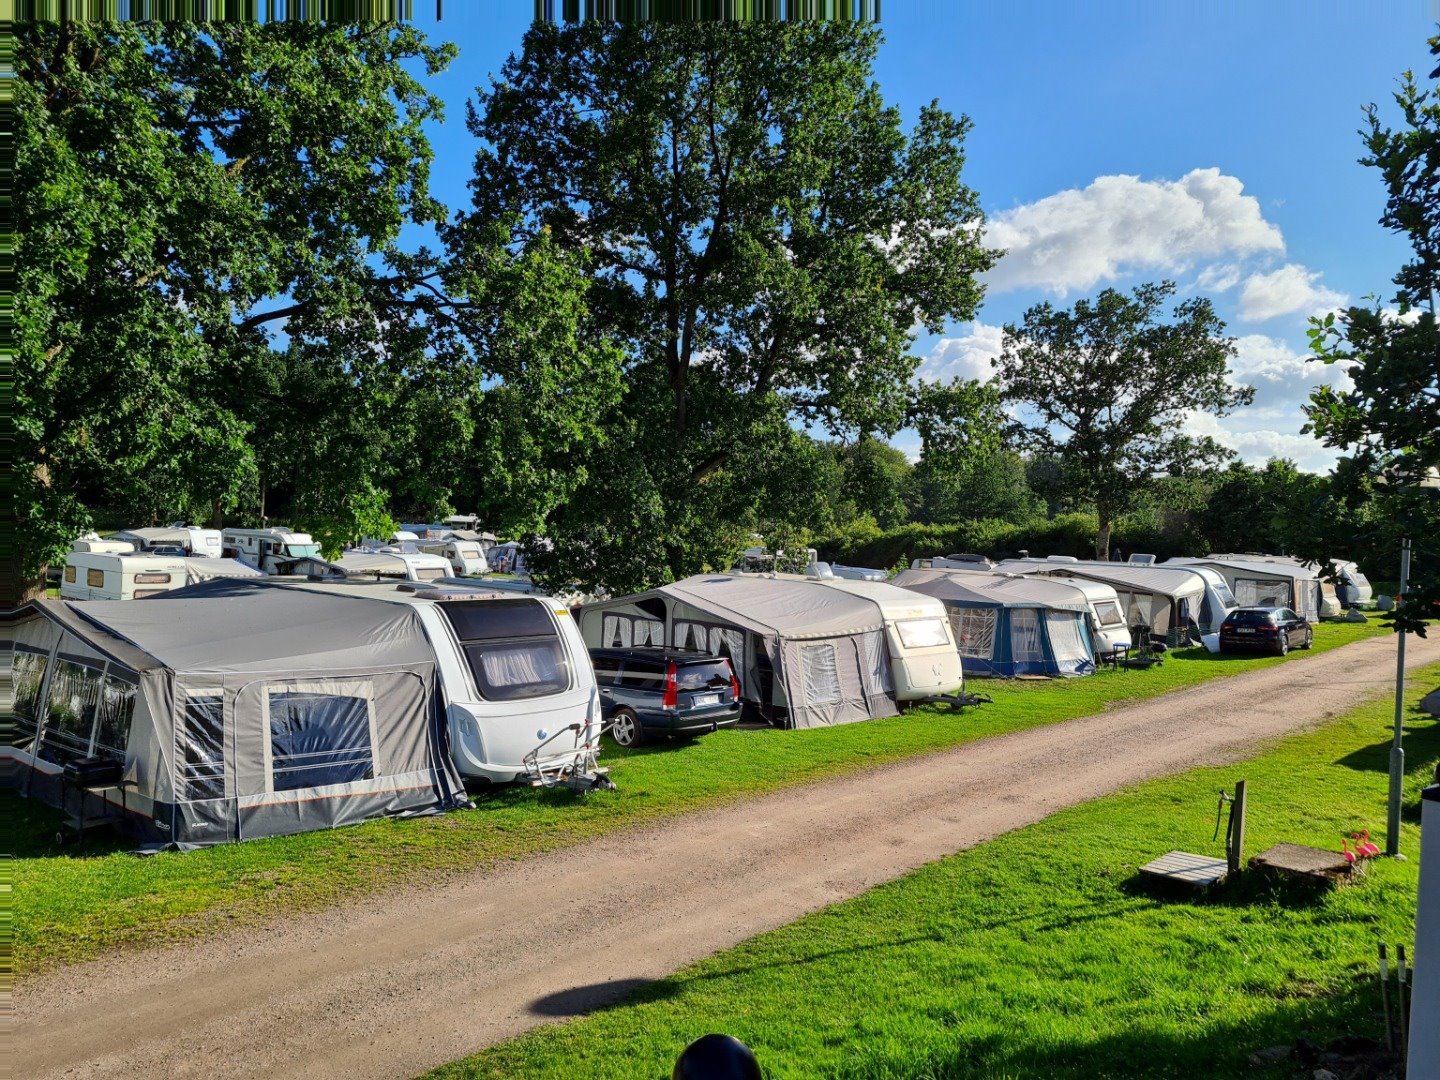 Kampeerplaats caravan/stacaravan/tent met elektriciteit